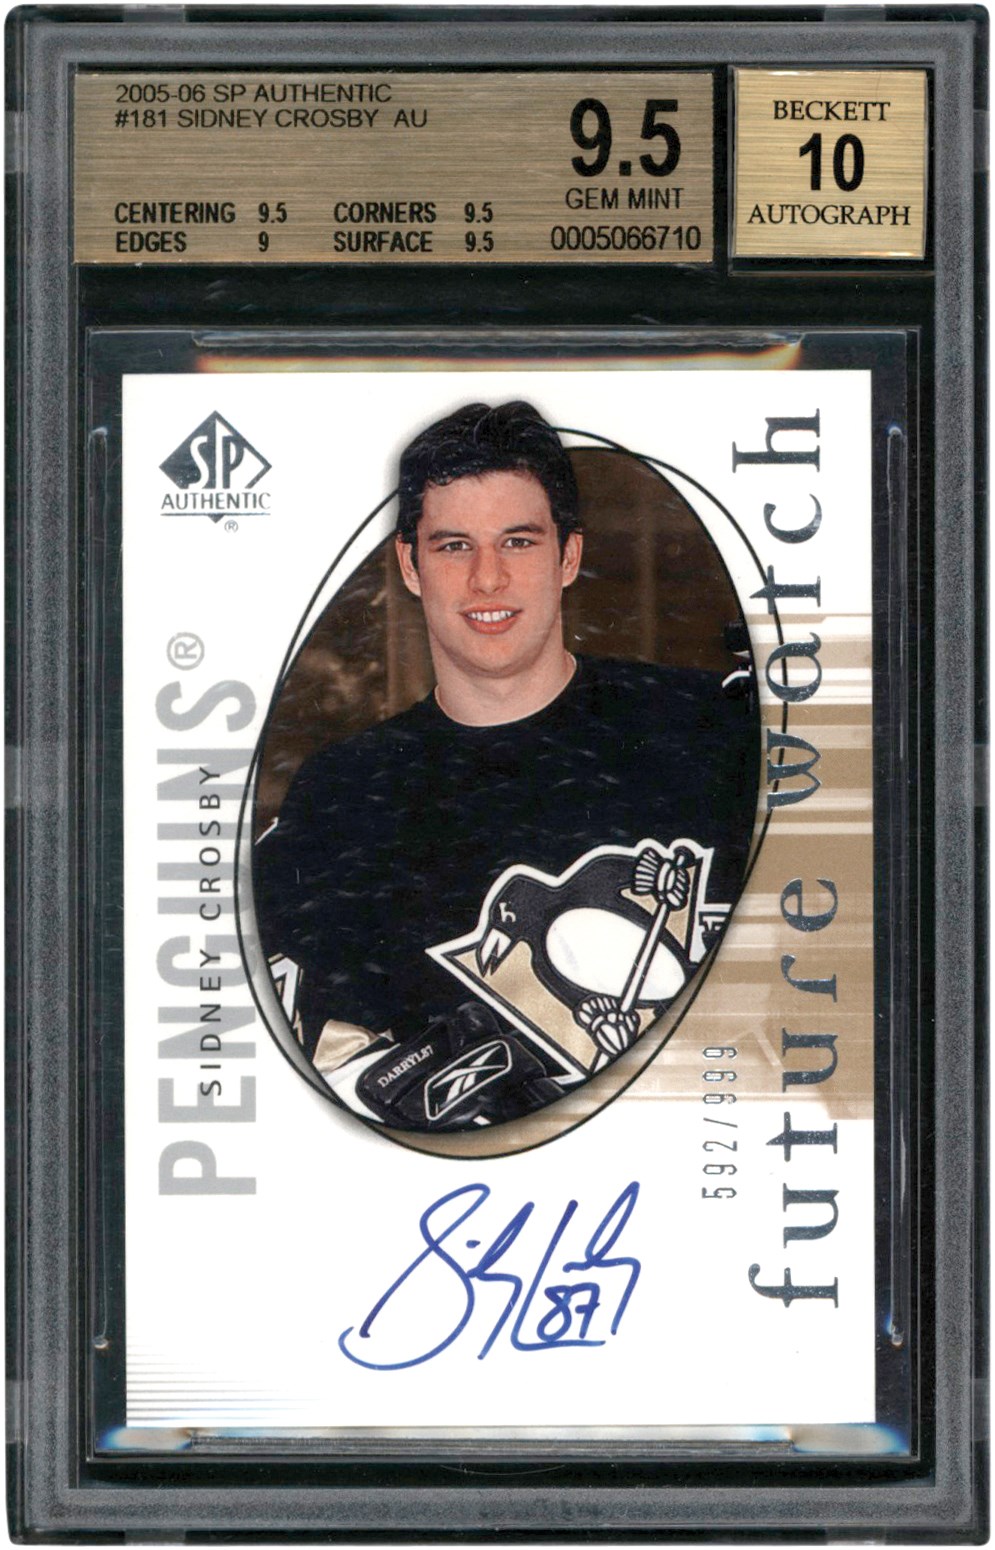 - 2005-2006 SP Authentic Hockey #181 Sidney Crosby Rookie Autograph Card #592/999 BGS GEM MINT 9.5 Auto 10